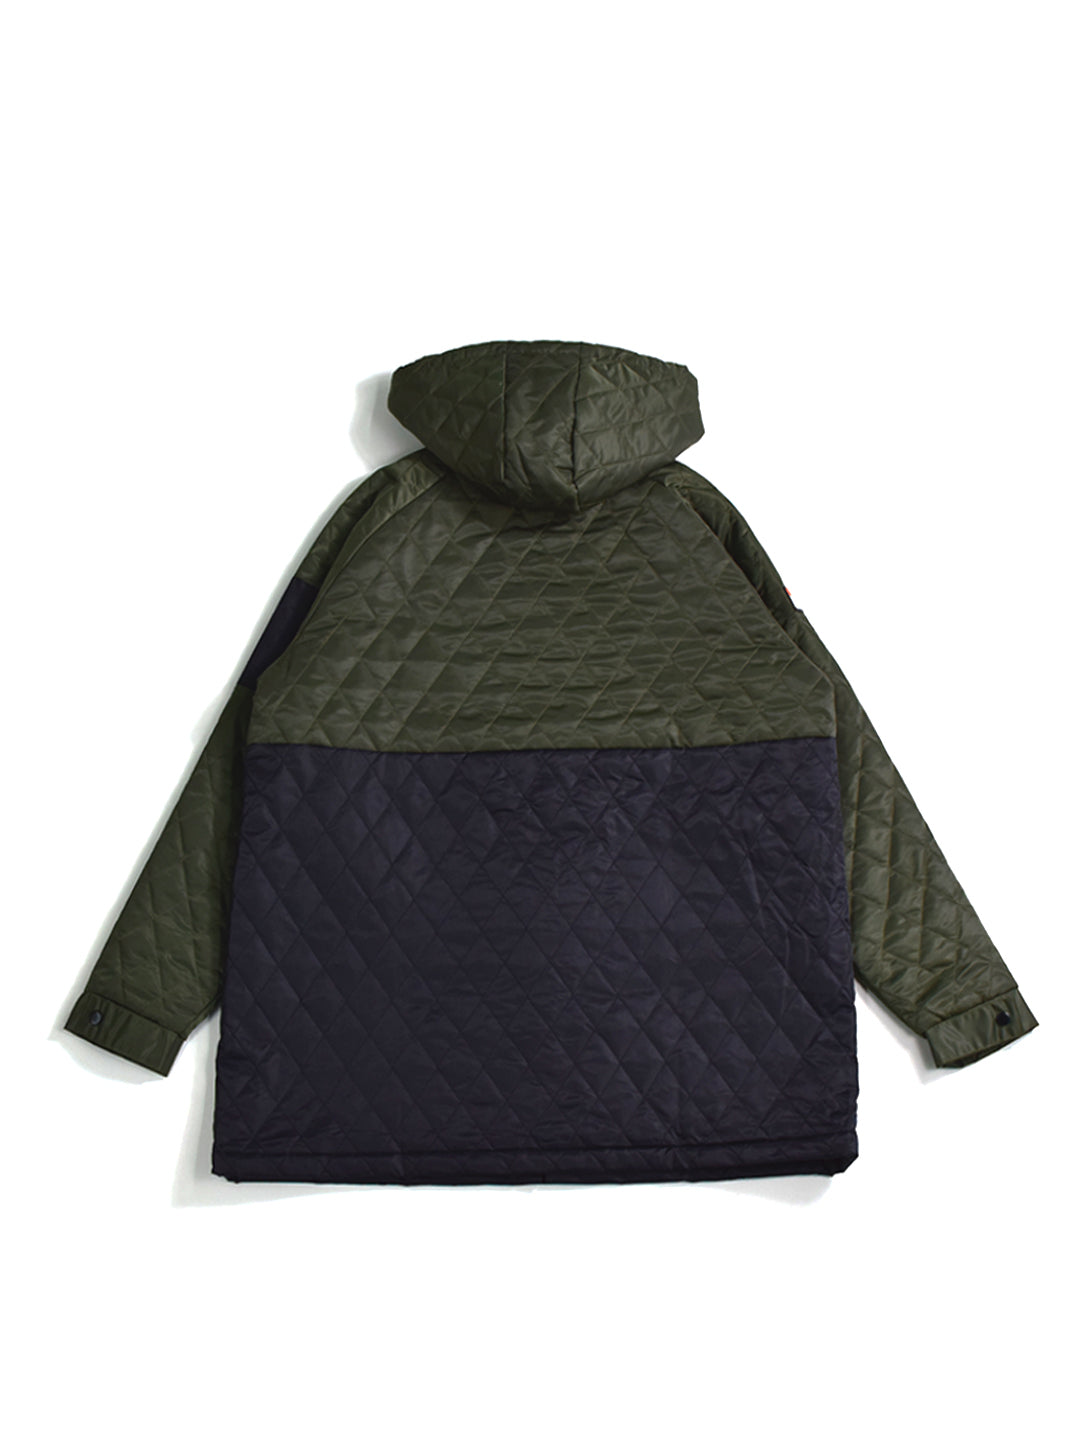 Zara - Hooded Fleece Jacket - Anthracite Grey - Unisex